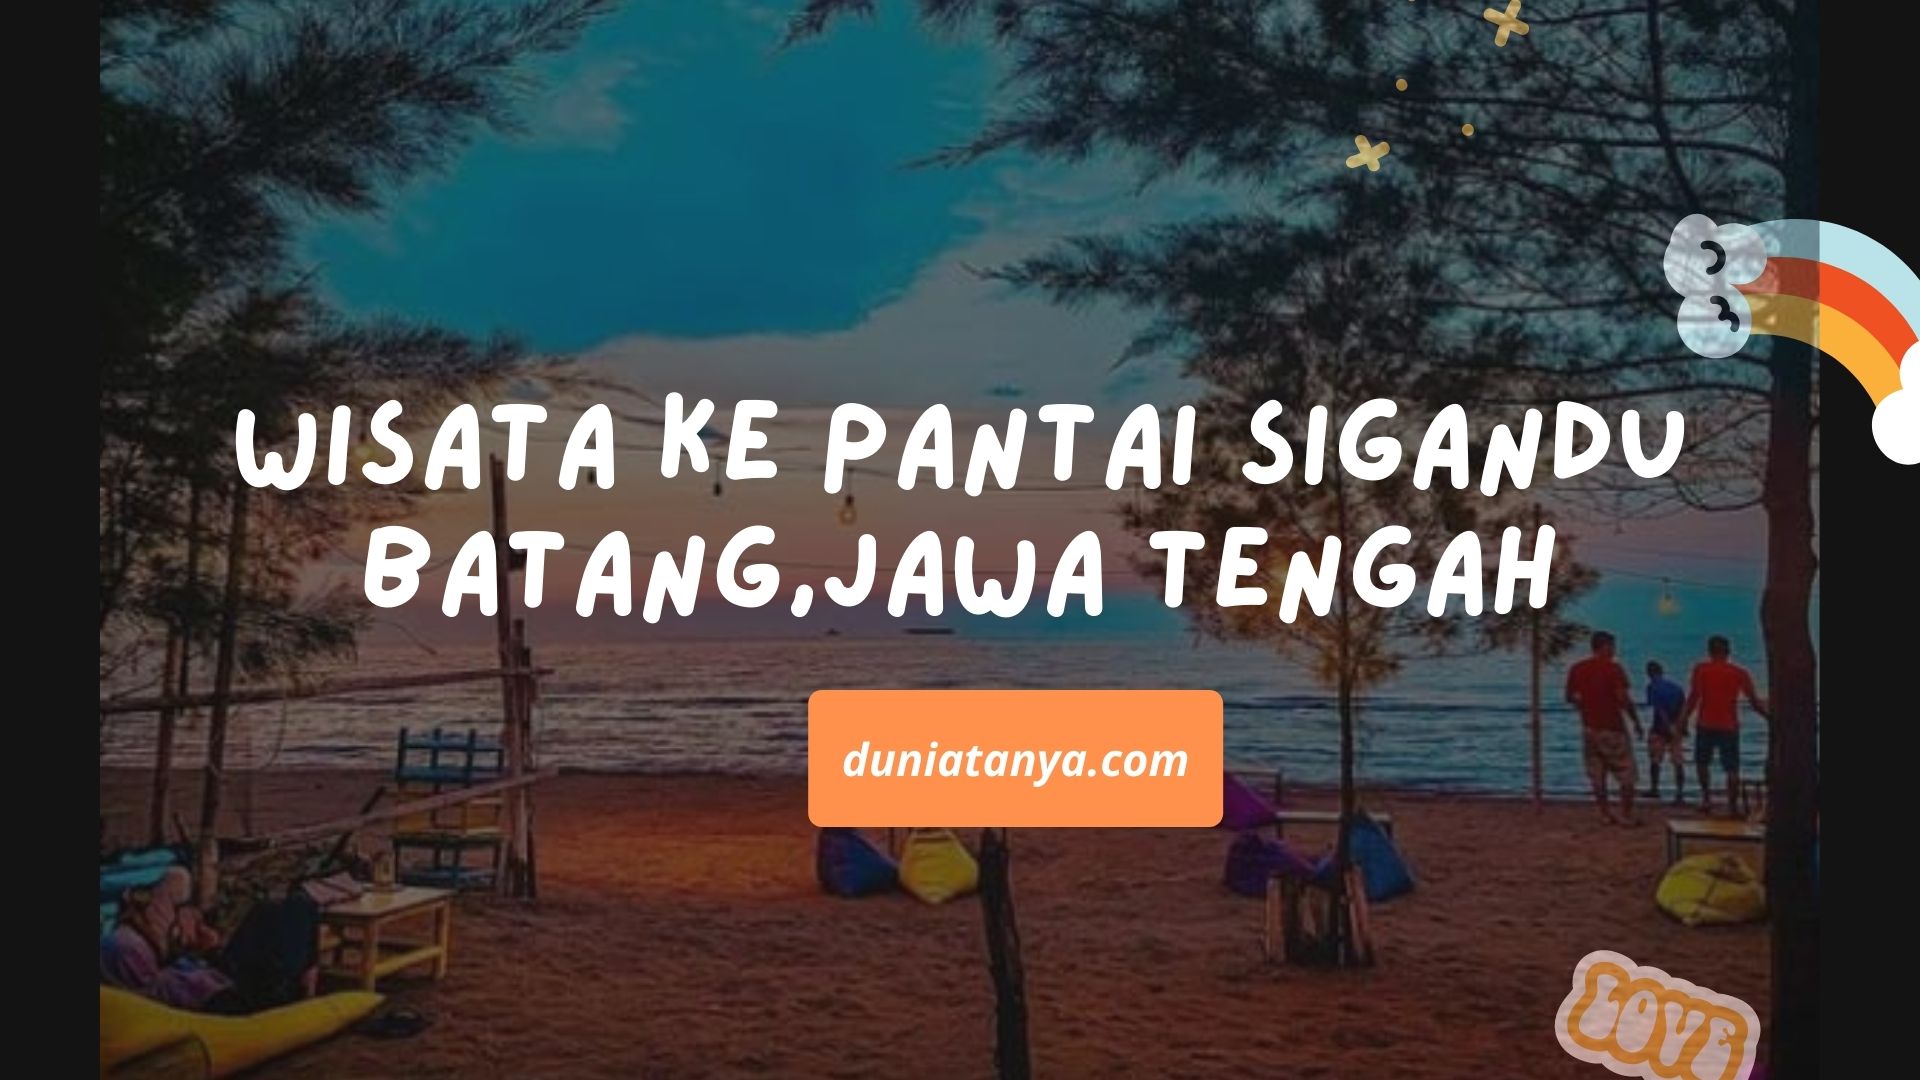 You are currently viewing Wisata Ke Pantai Sigandu Batang,Jawa Tengah